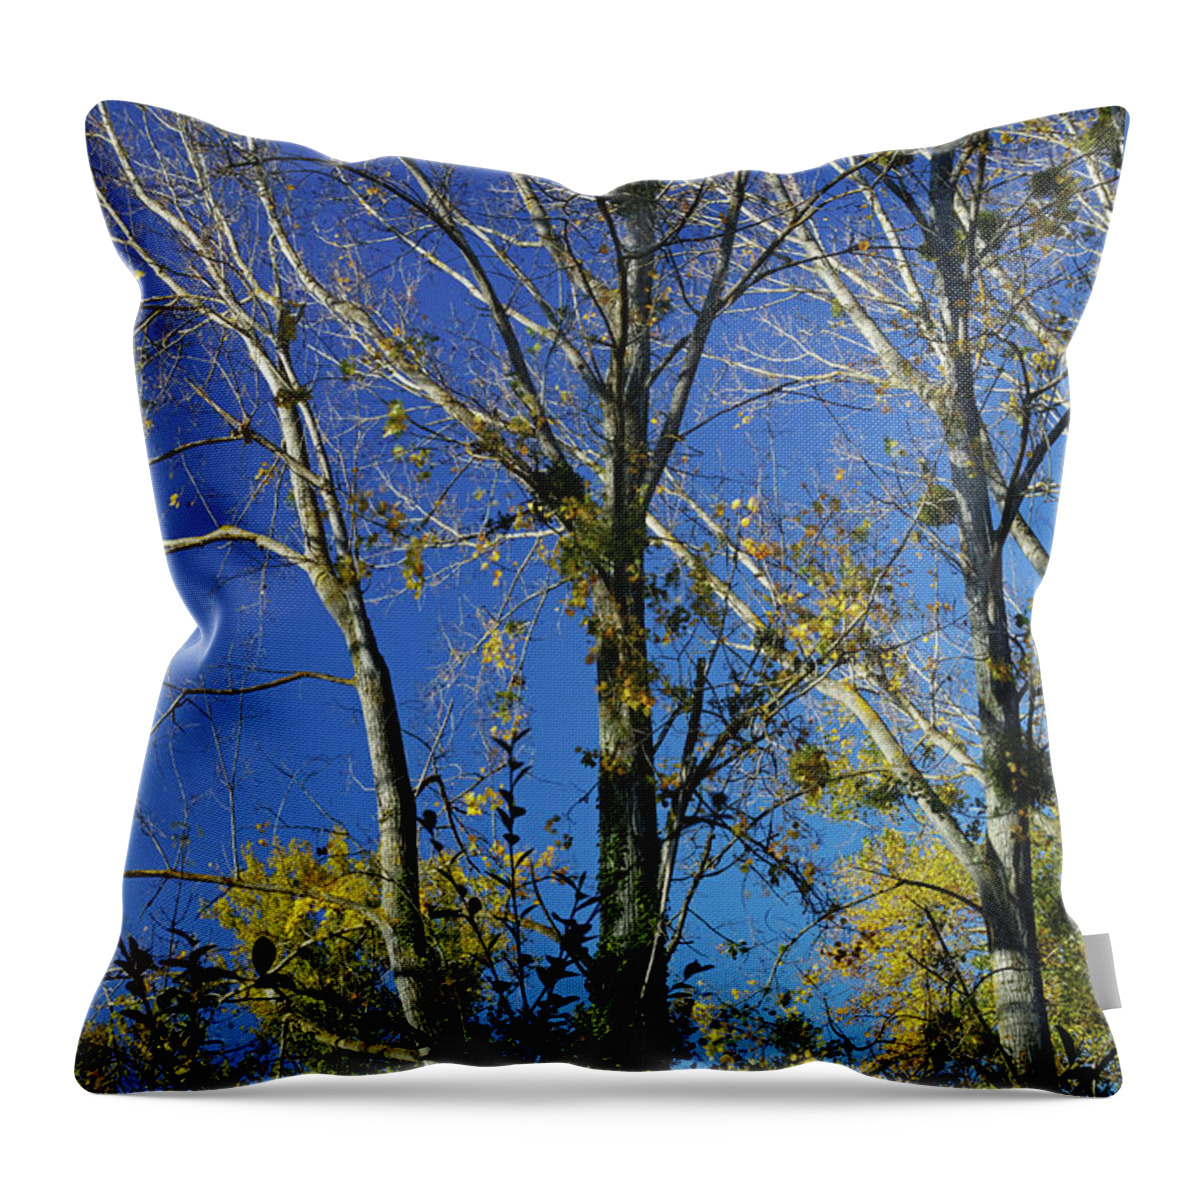 Landscape Throw Pillow featuring the photograph Azure blue by Karine GADRE